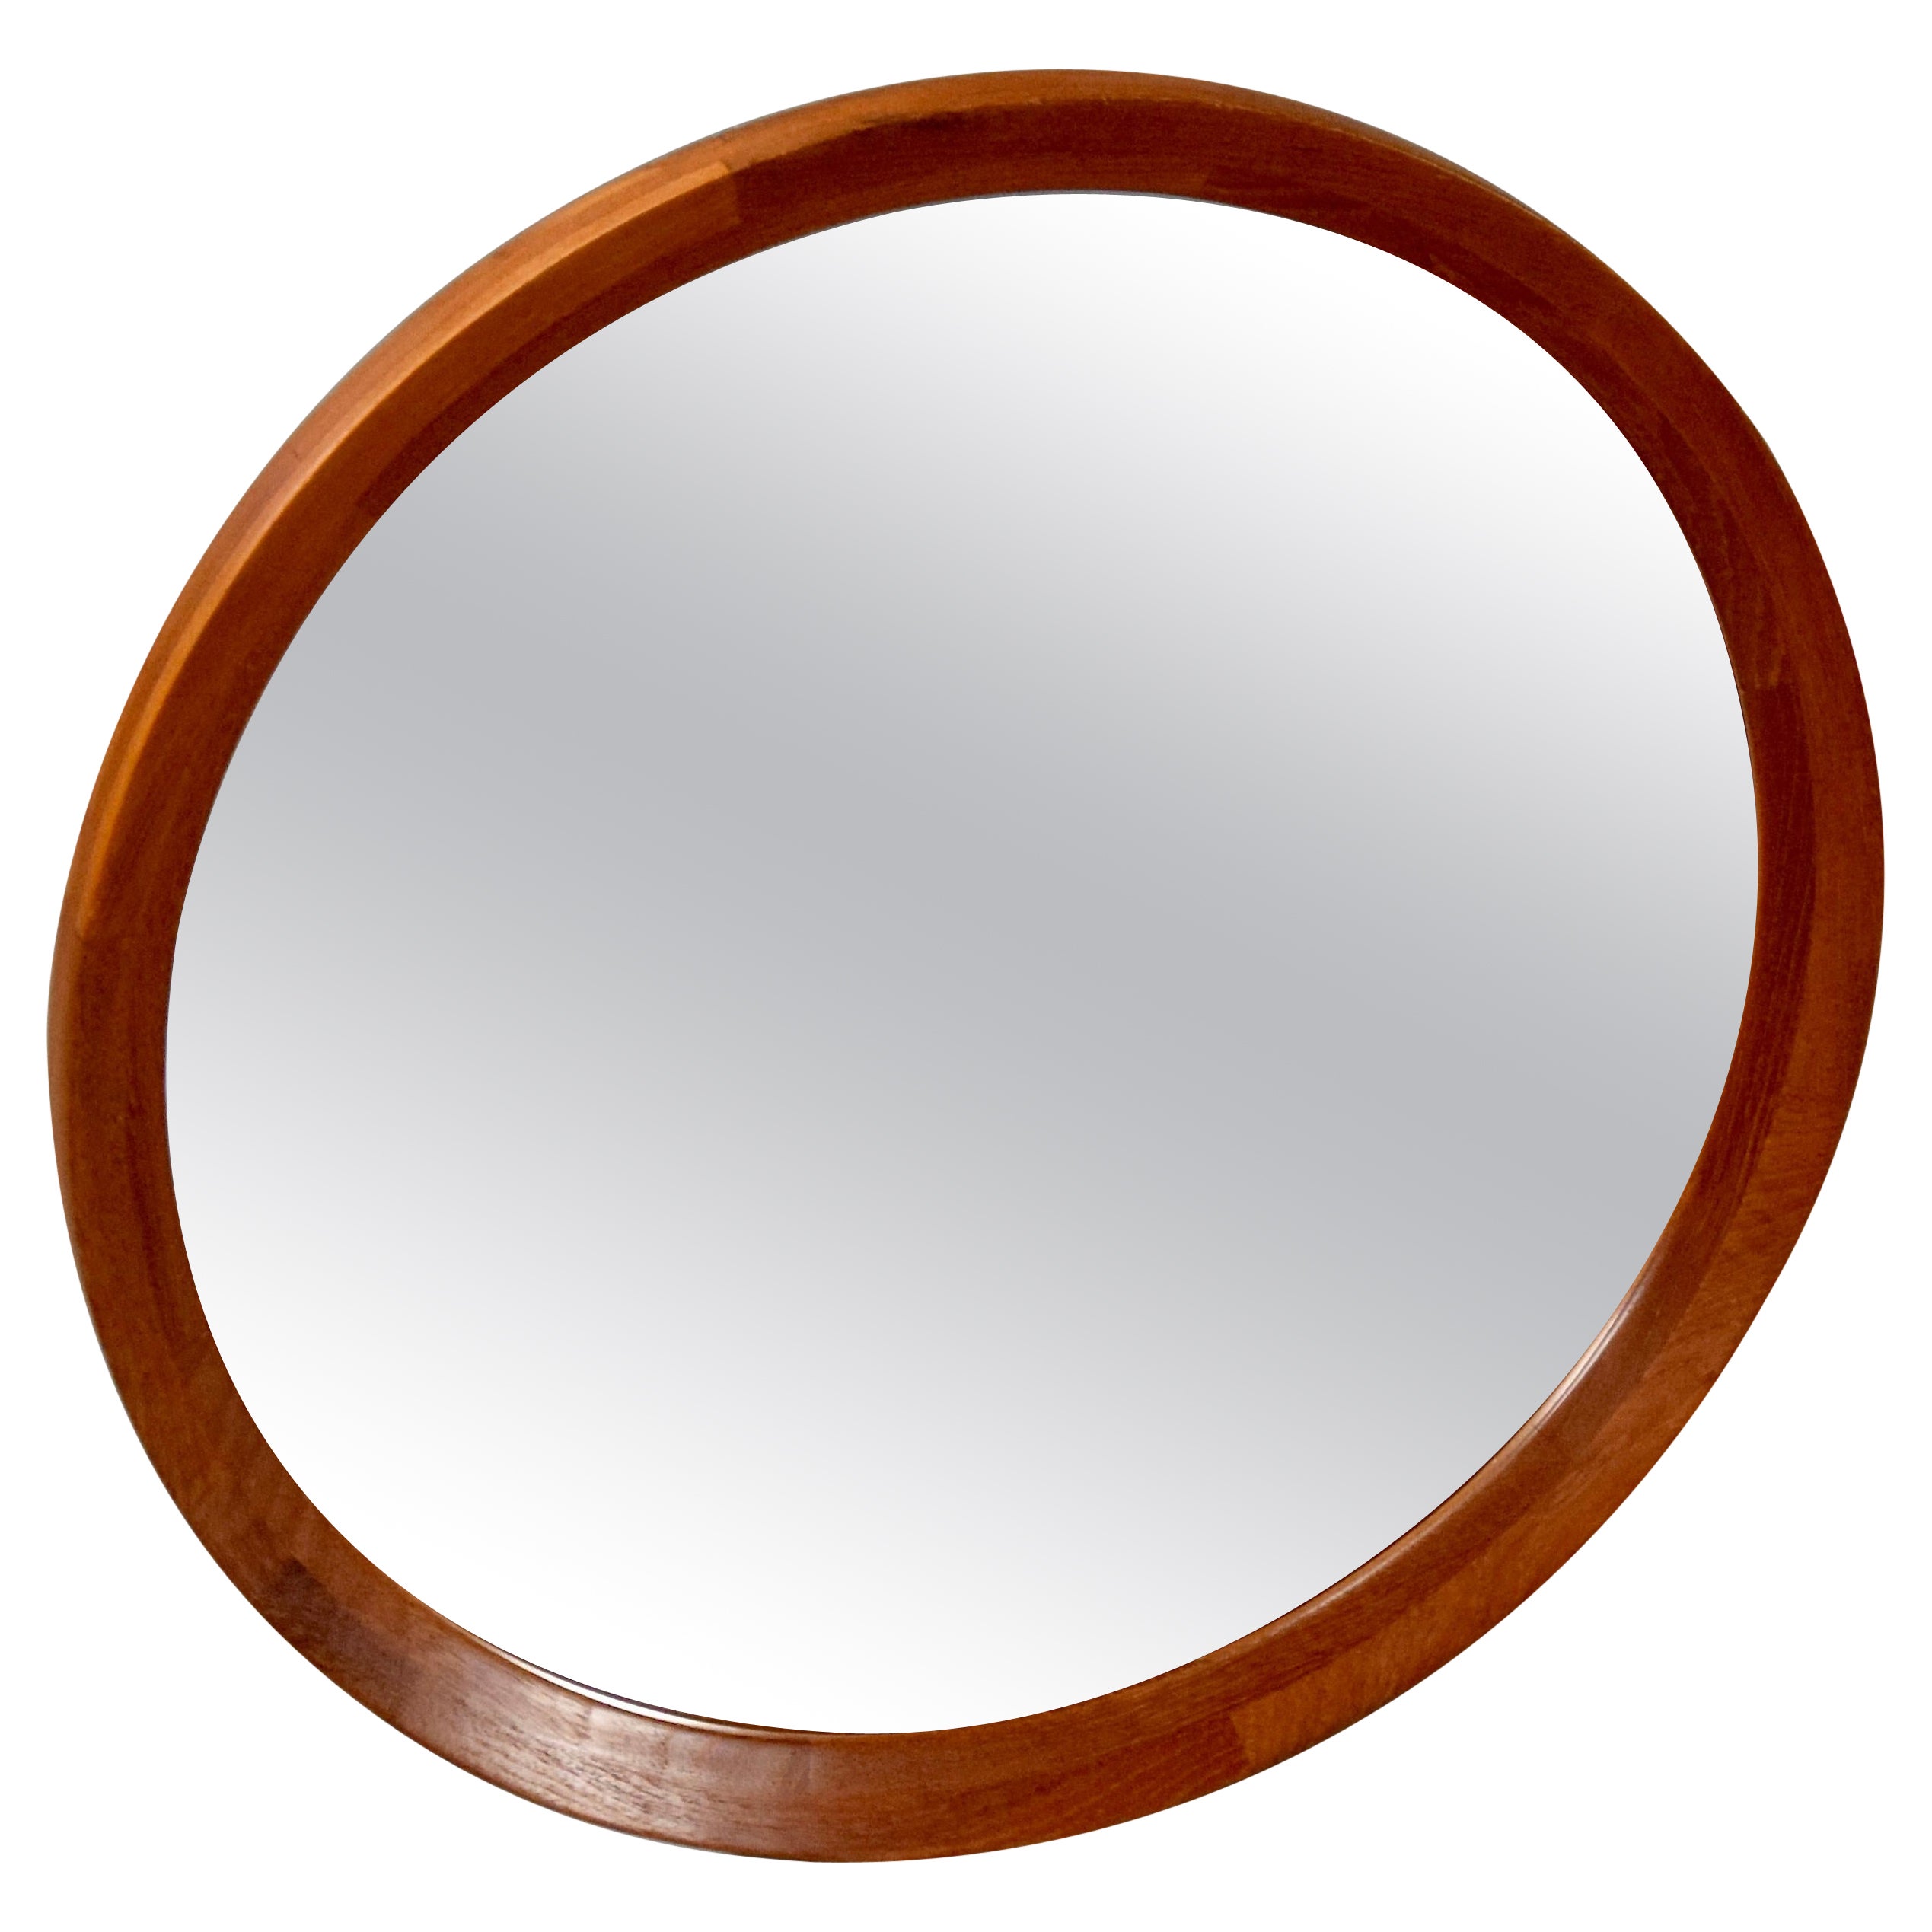 Scandinavian Mid-Century Modern Round Teak Wood Wall Mirror For Sale